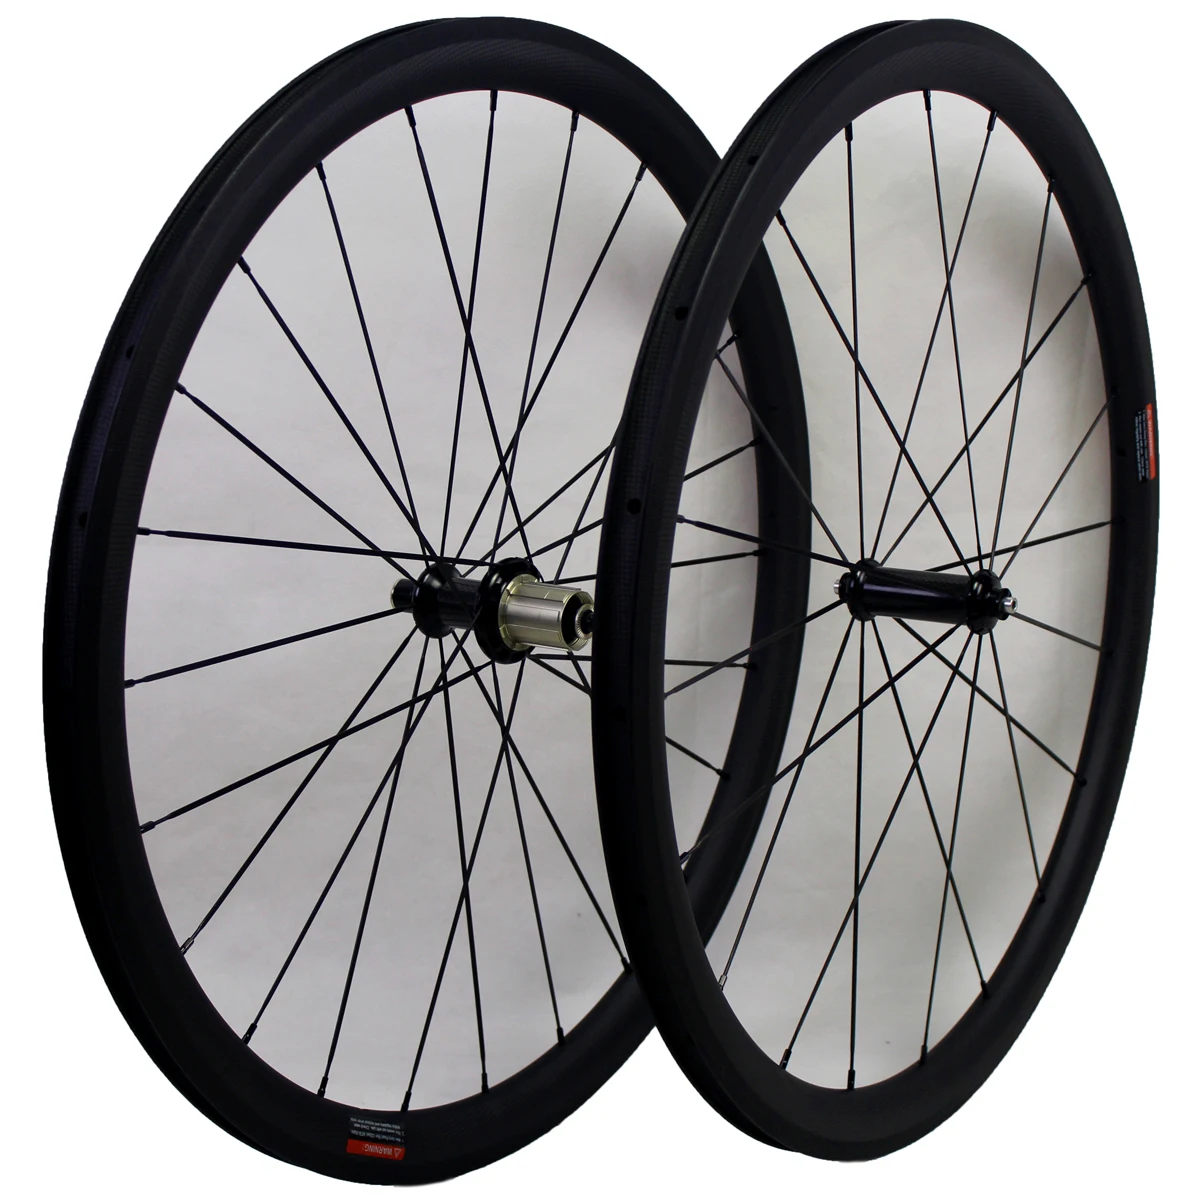 38mm Carbon Wheels 700C Clincher 25mm Width  Wheel set  Road Race Bicycle Wheel 